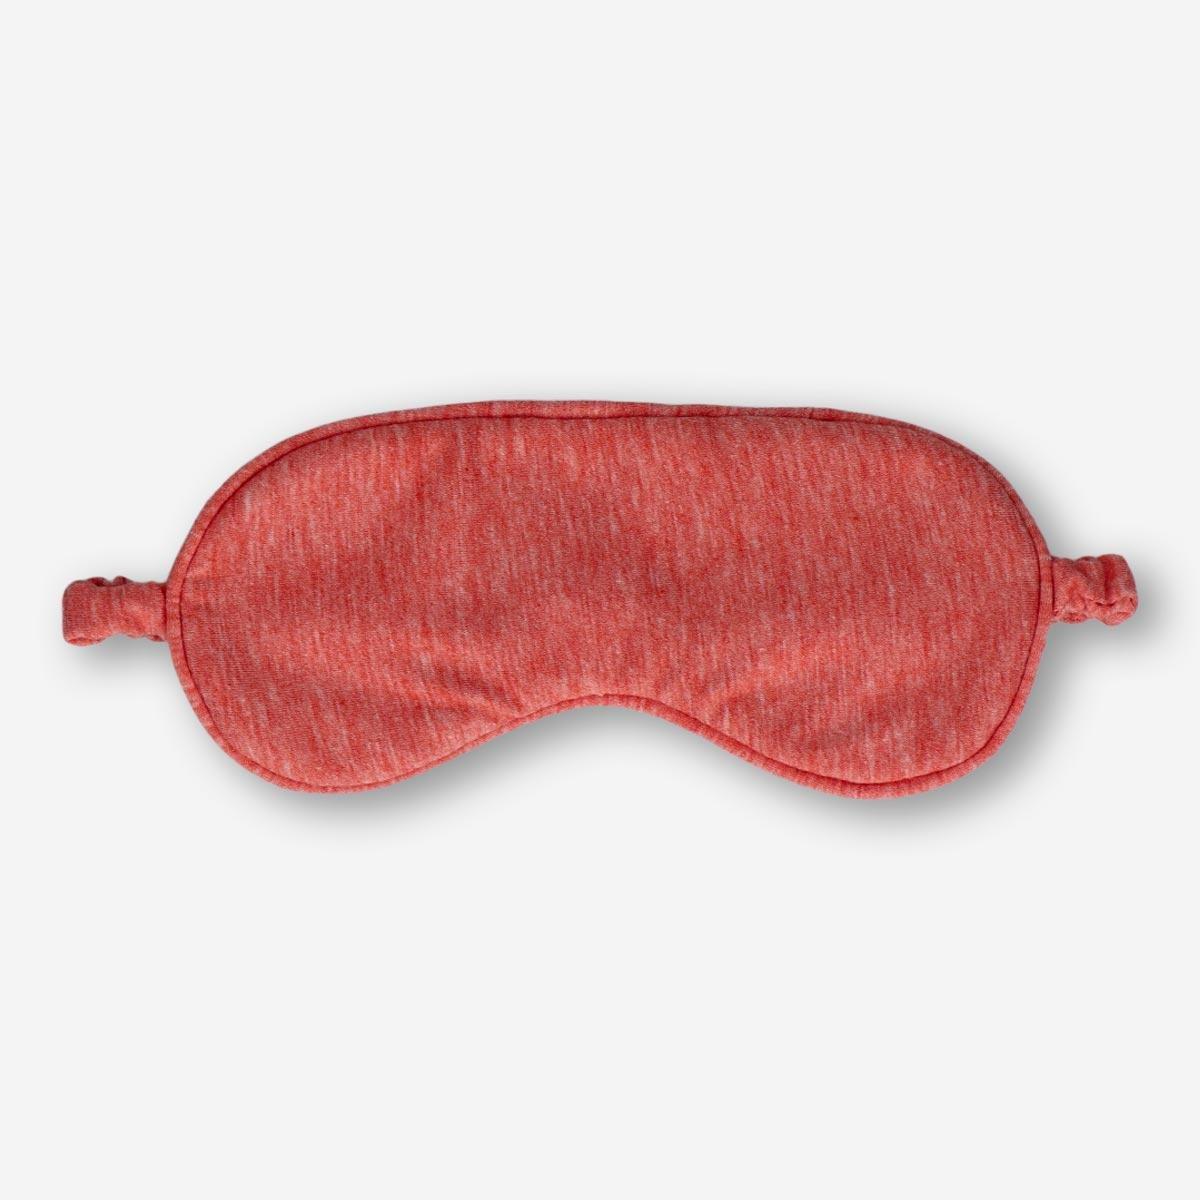 Red soft sleeping mask